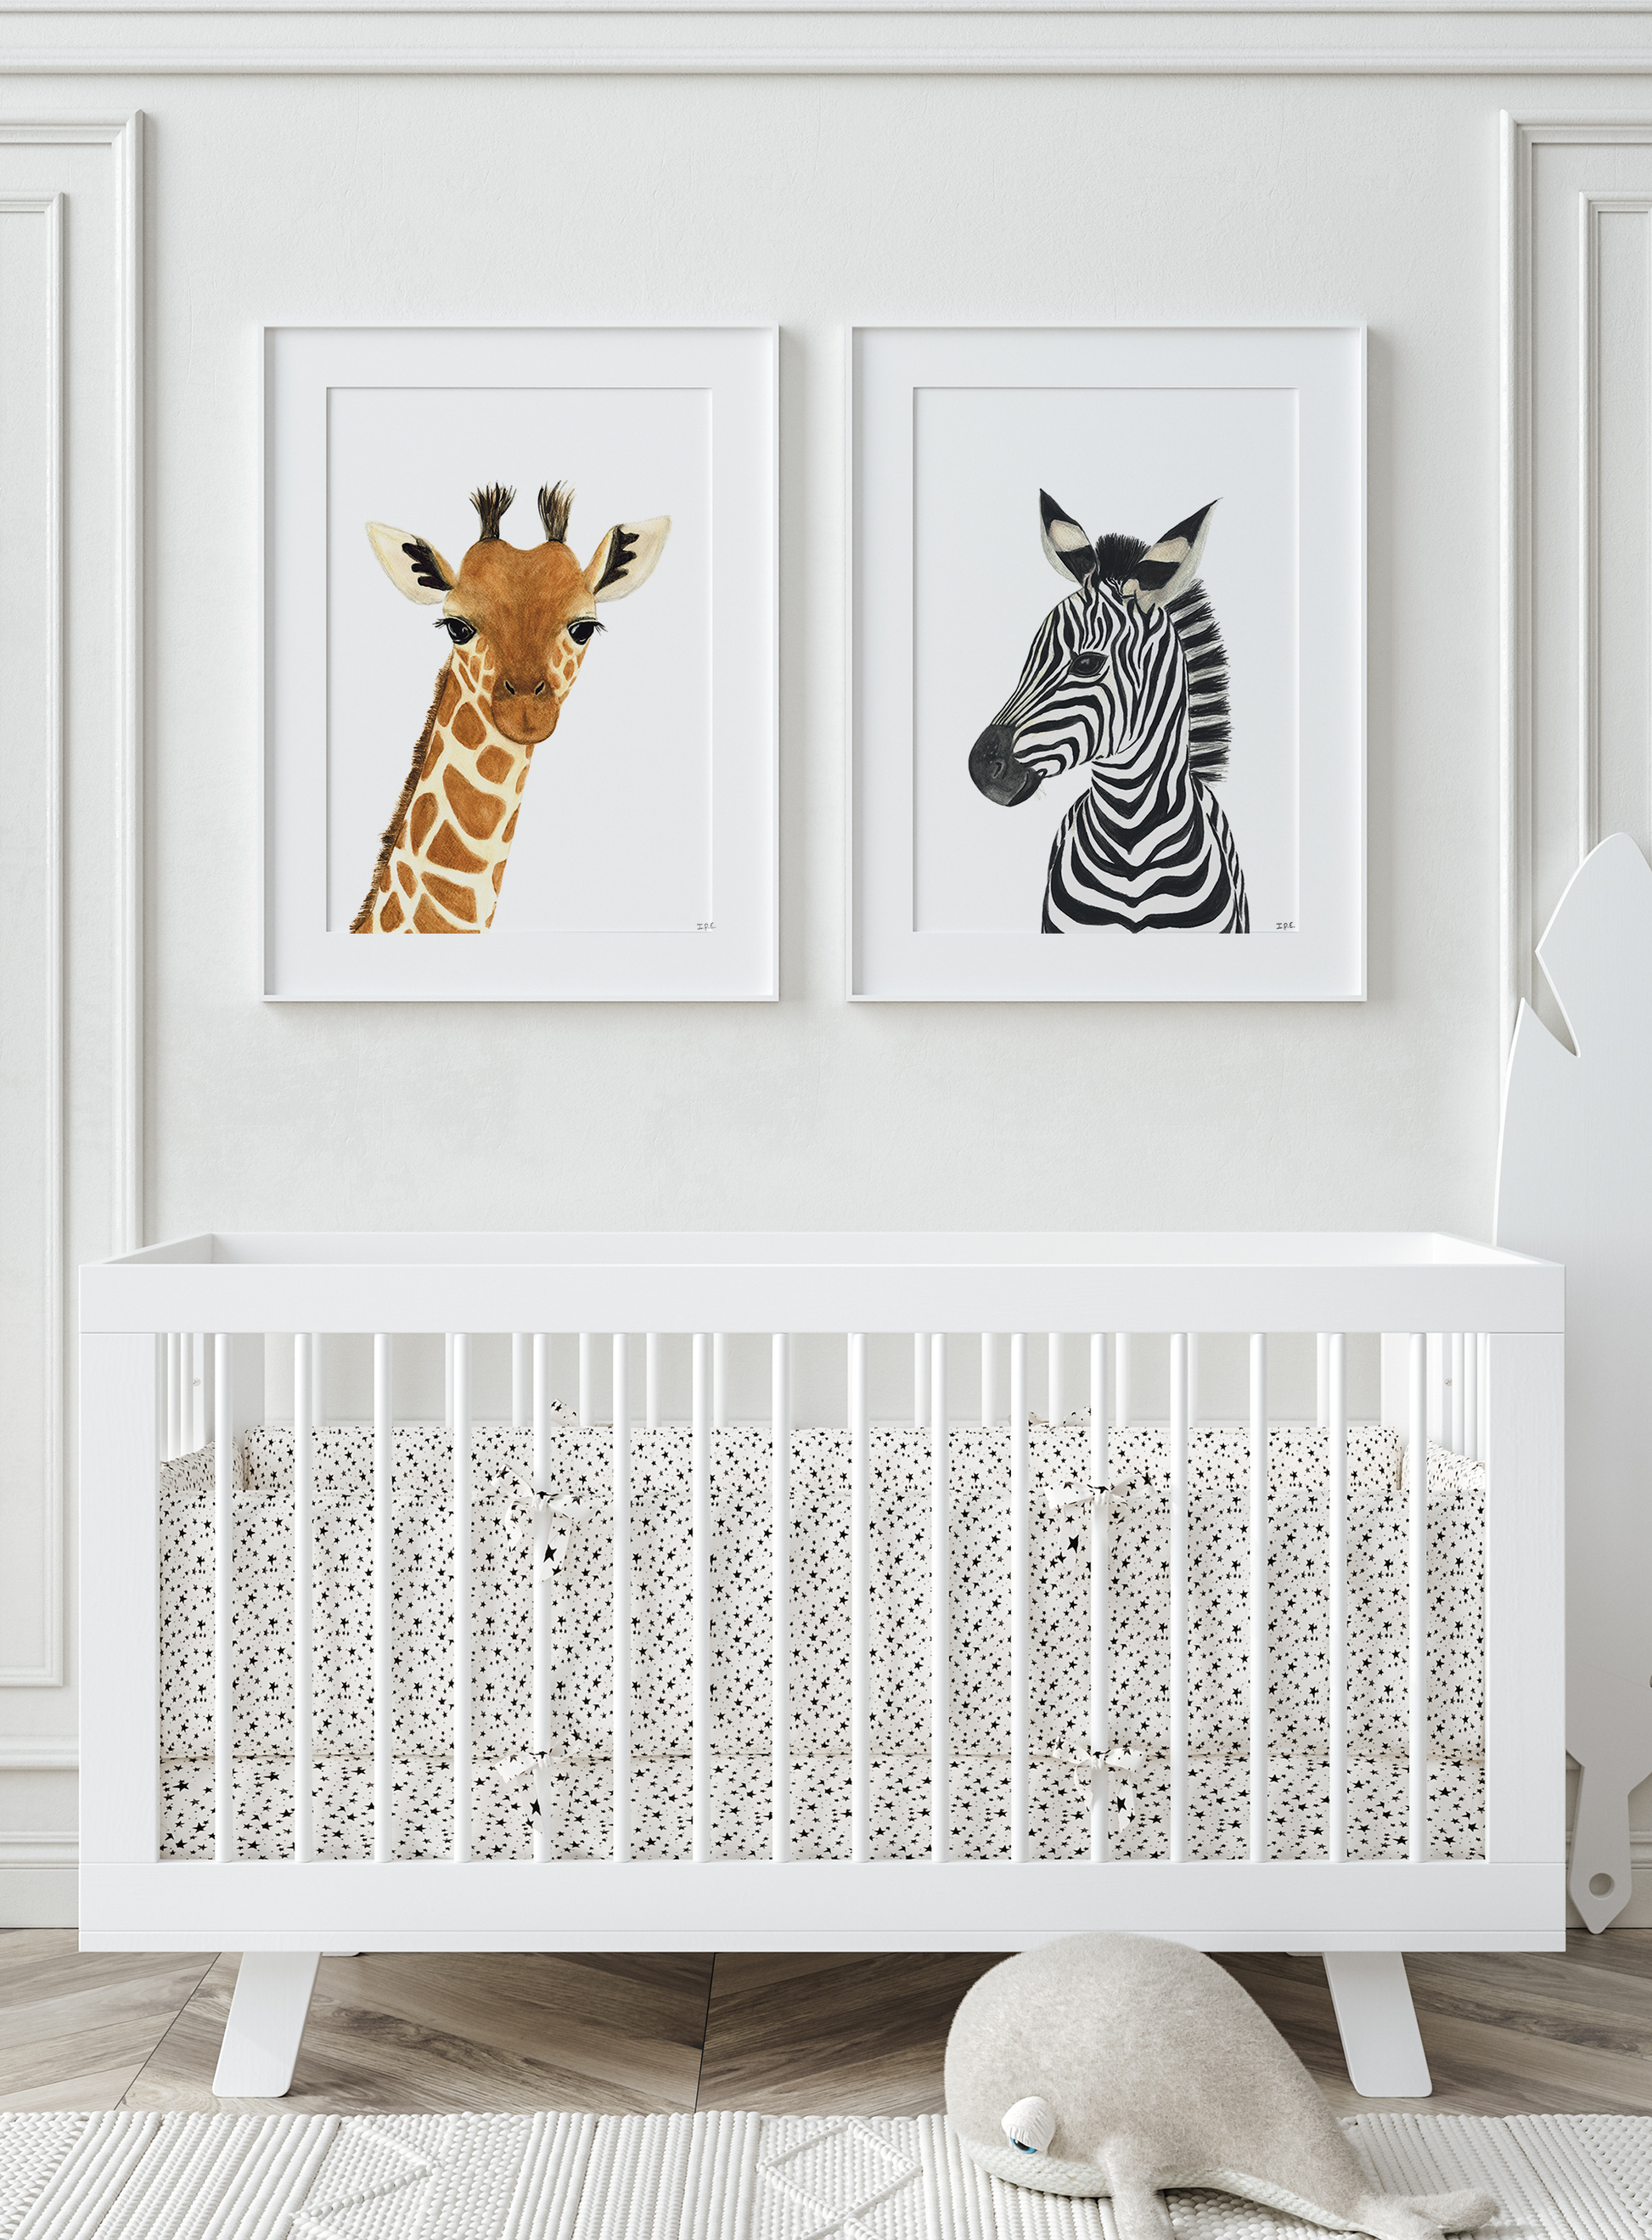 Set of 2 safari animal wall art in a babyroom: giraffe and zebra